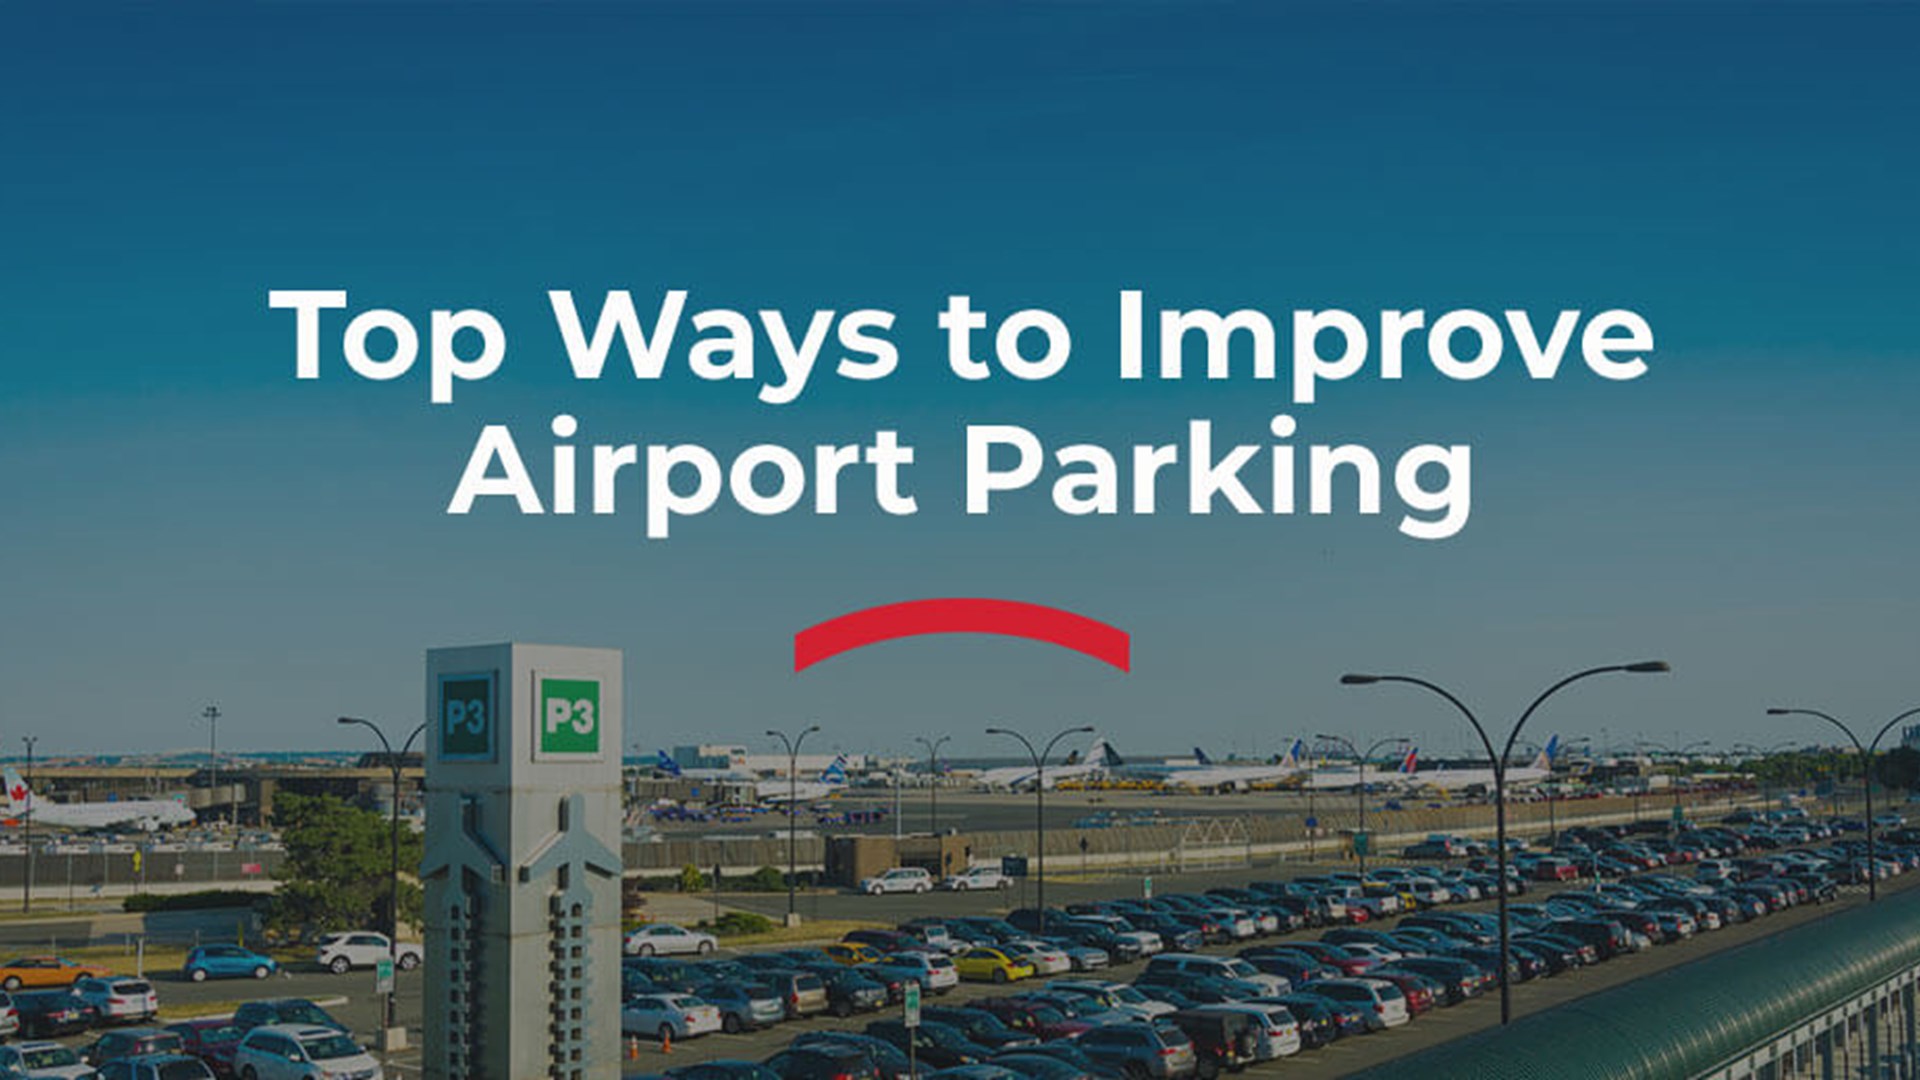 Top Ways to Improve Airport Parking